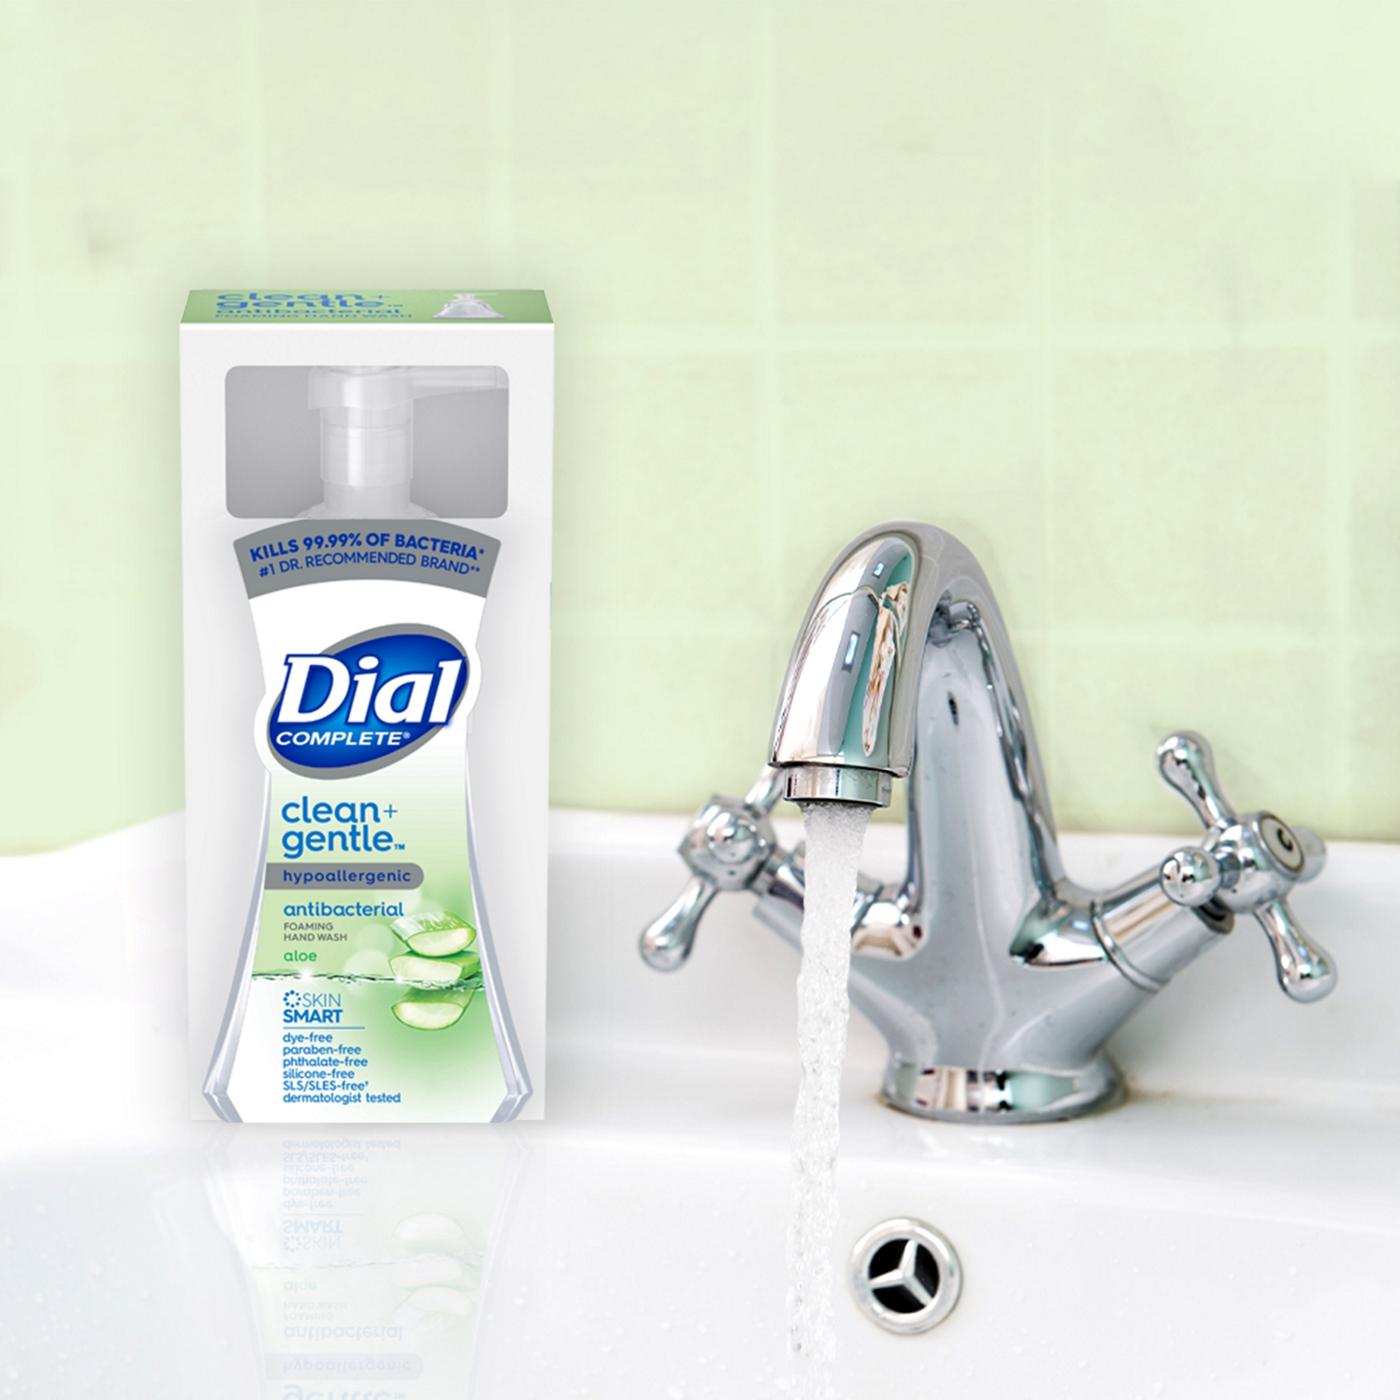 Dial Complete Clean + Gentle Antibacterial Foaming Hand Wash, Aloe Scent; image 8 of 9